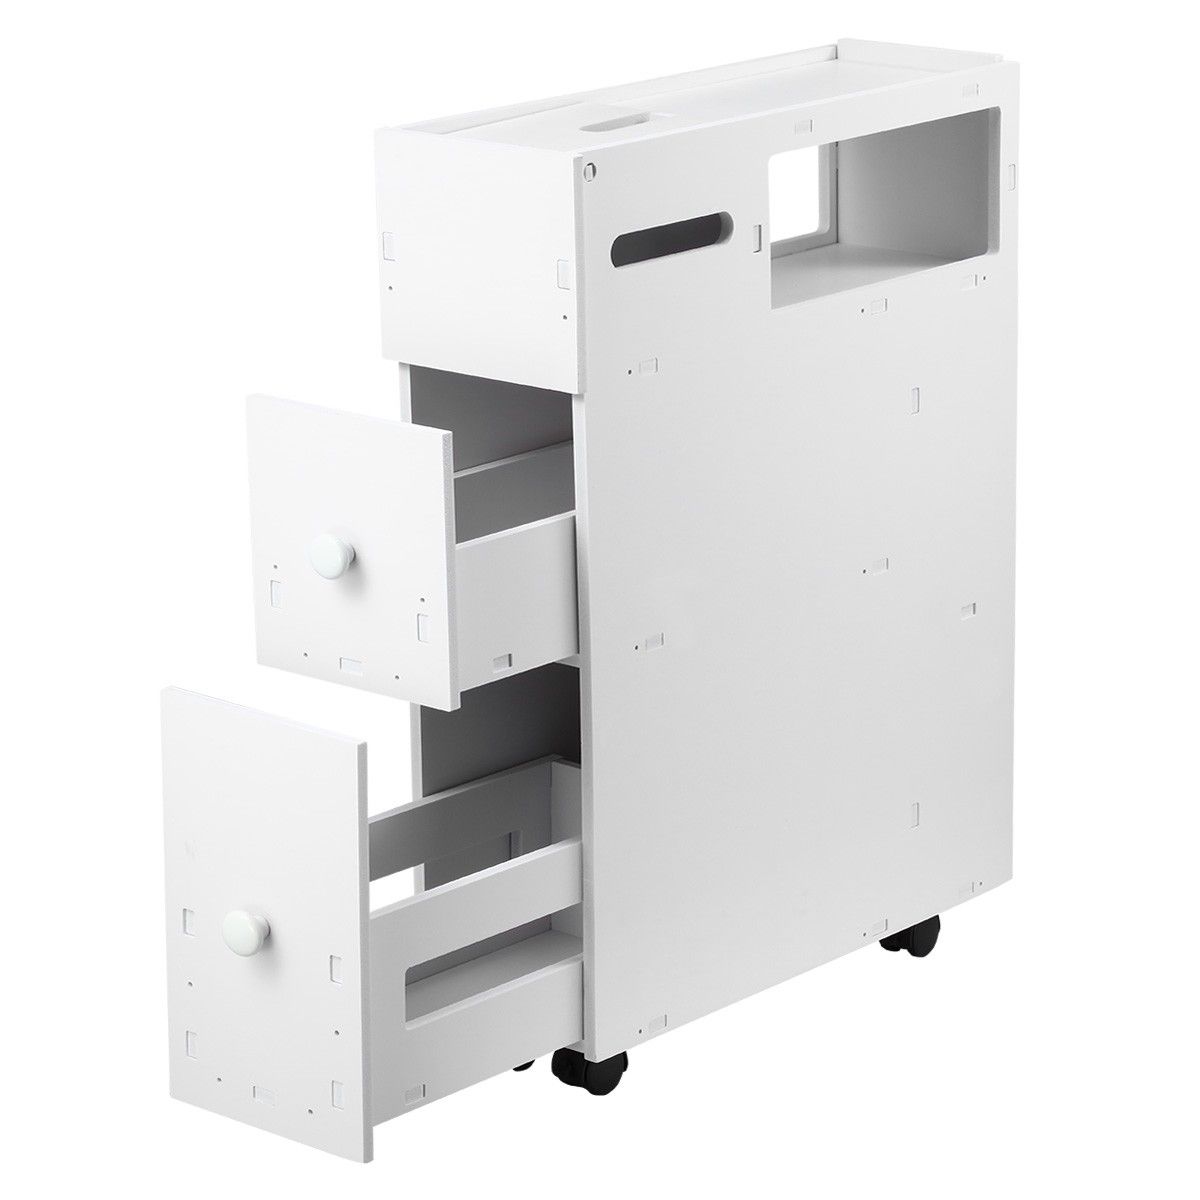 Wheeled Bathroom Cabinet Storage Drawer Organiser Toilet Caddy Tissue Box Holder